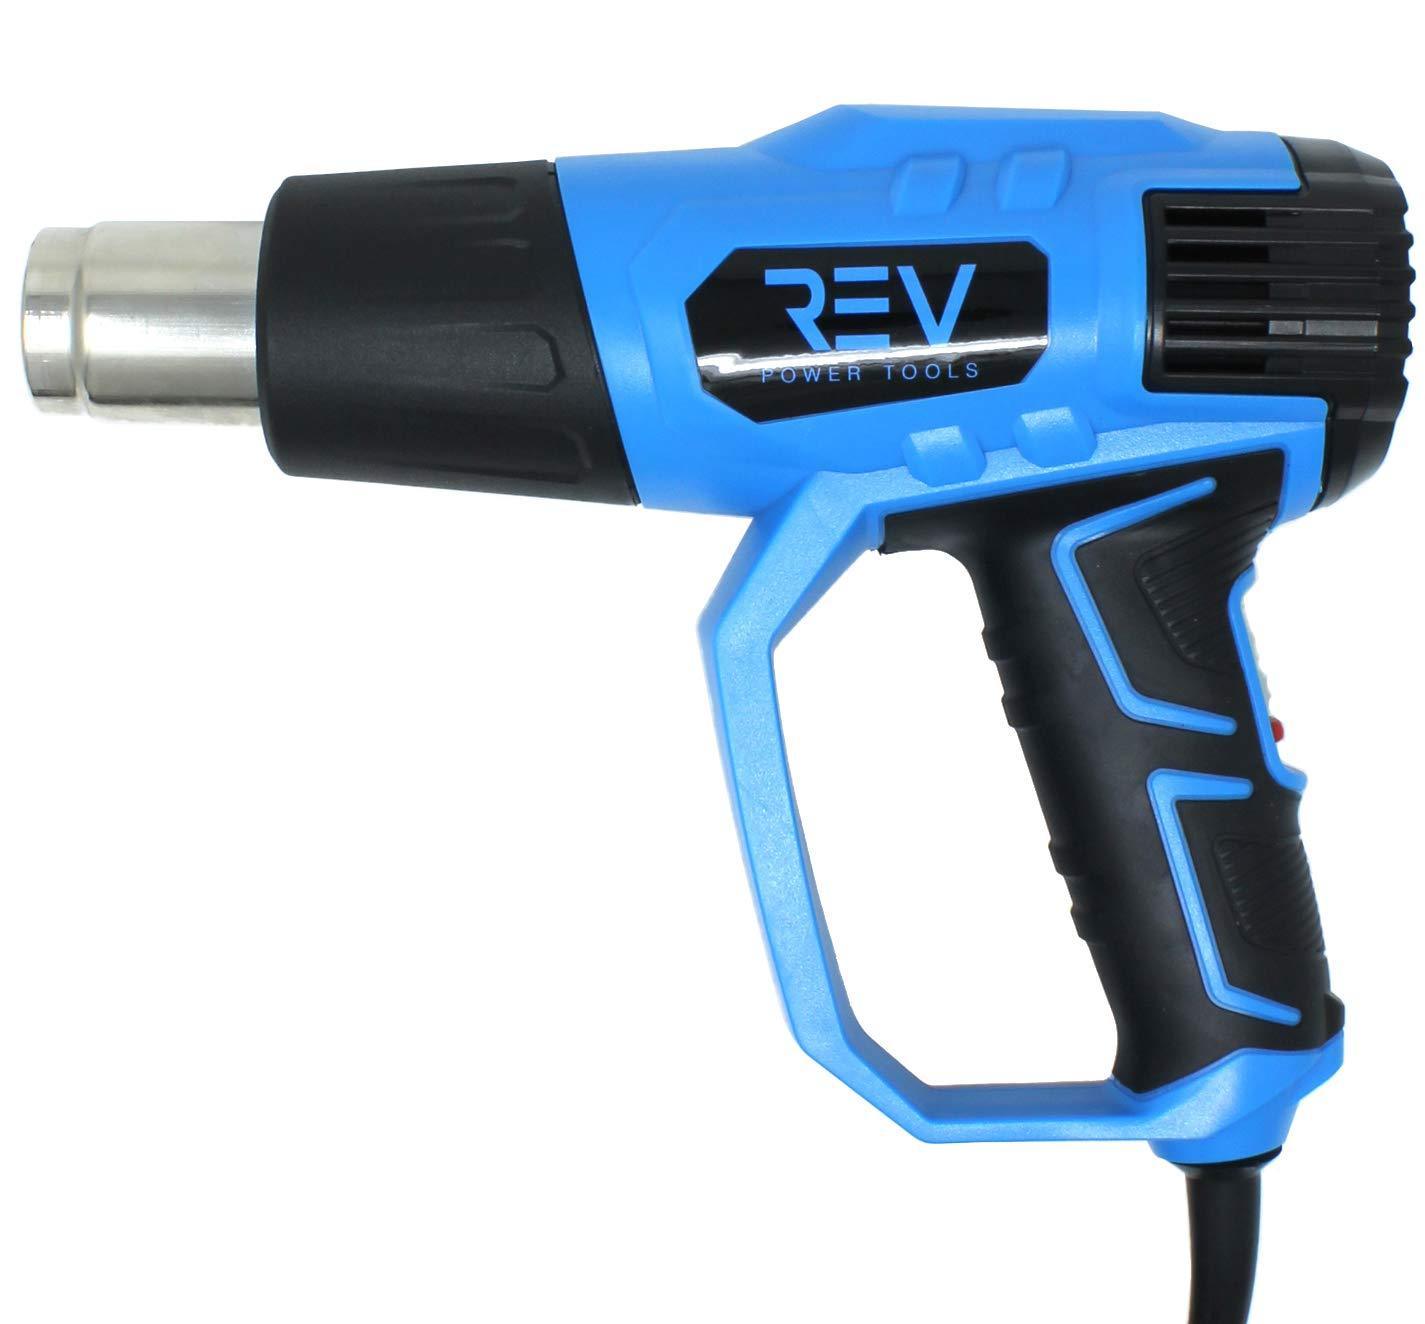 VViViD Scientific Heat Gun 1500w the best for Vinyl wrap and